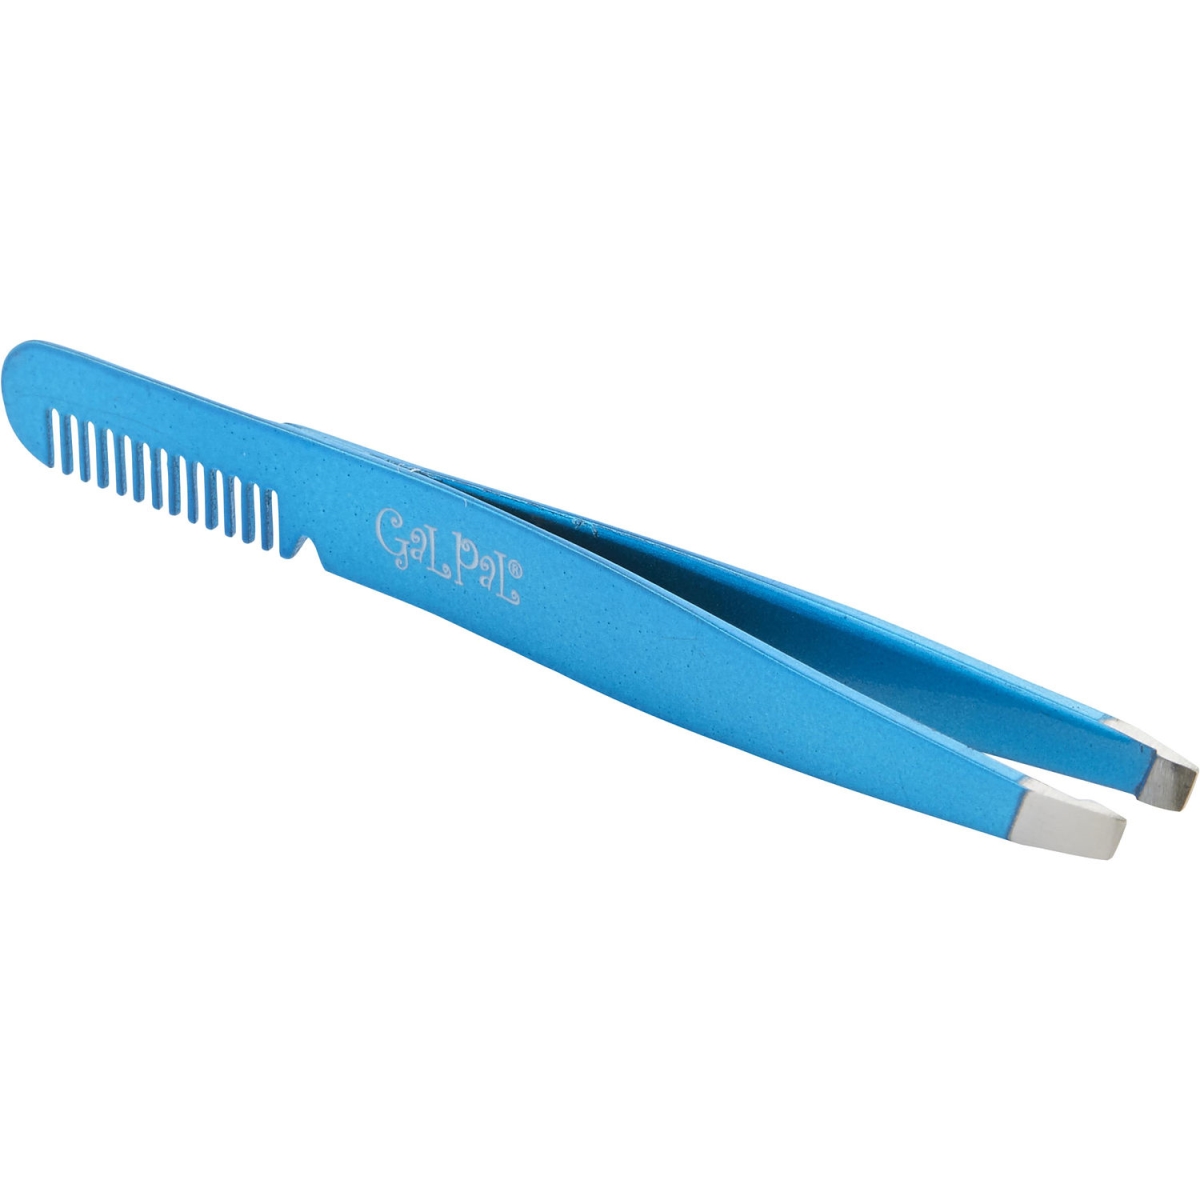 345205 Unisex Brow Tamer Comb, Blue